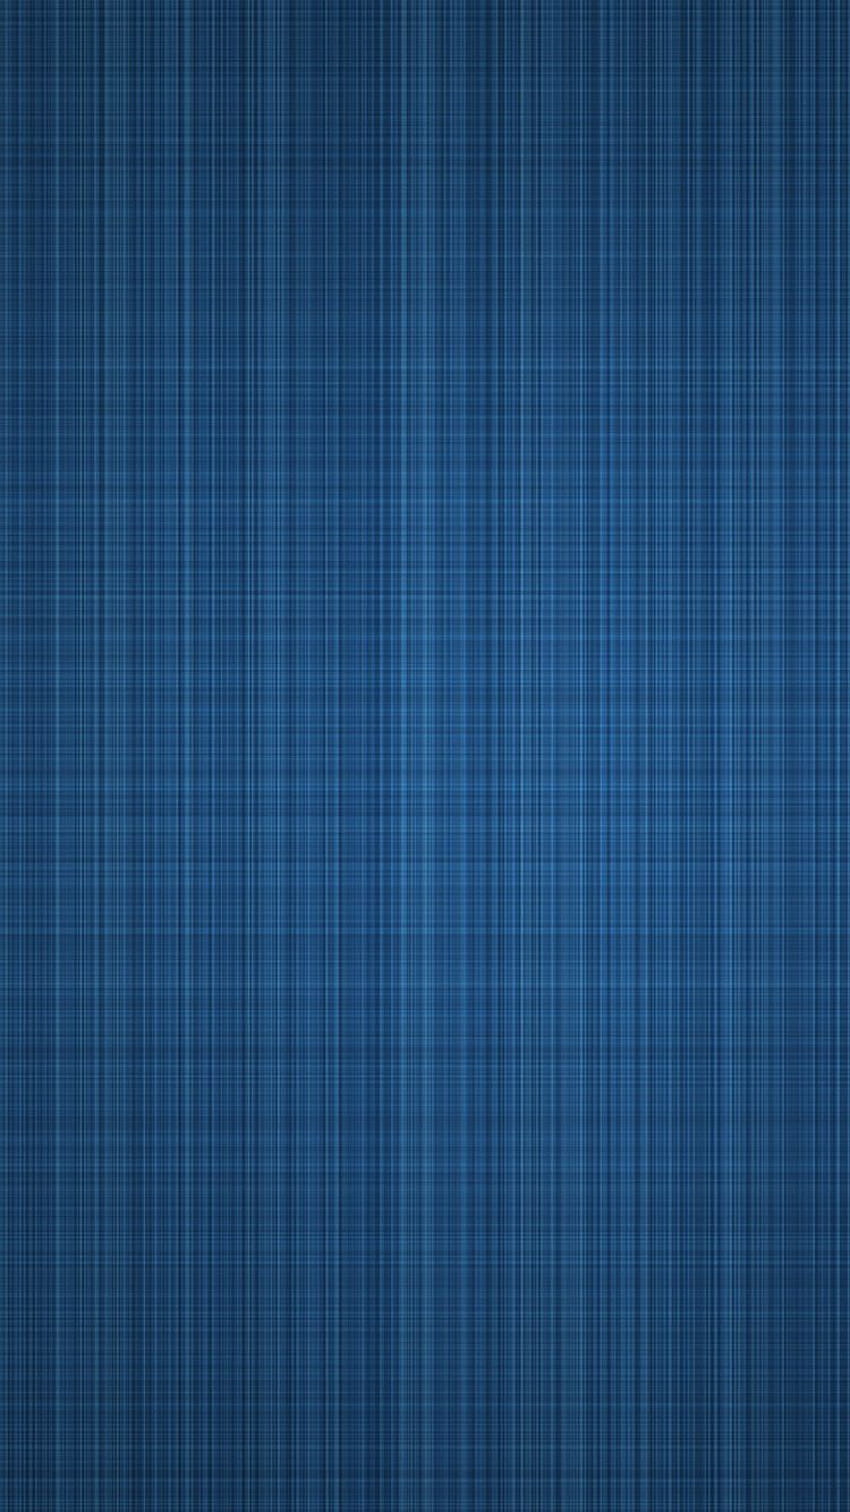 Biru iPhone 6 C006b wallpaper ponsel HD